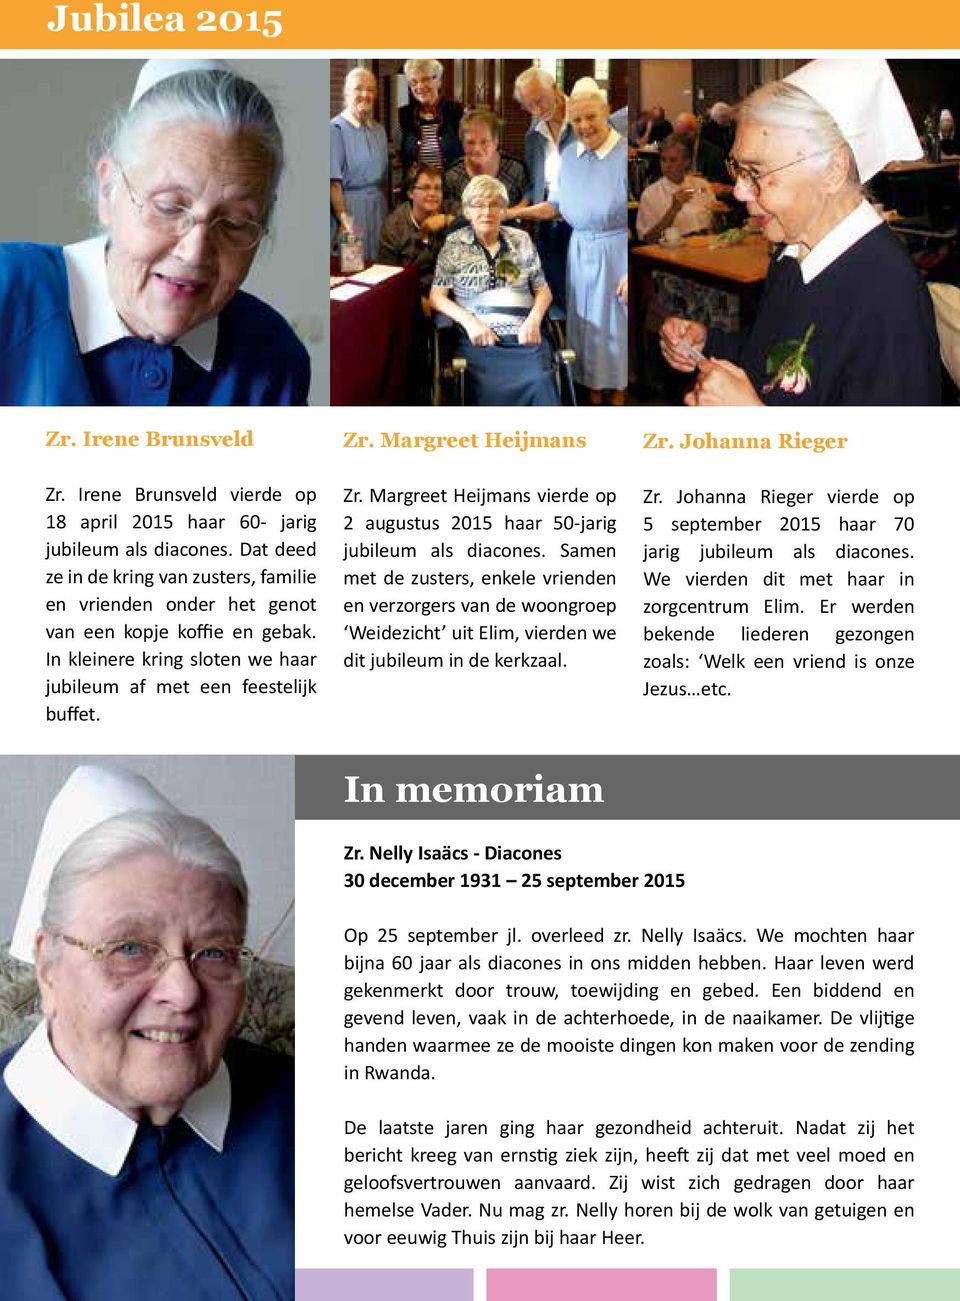 Margreet Heijmans Zr. Margreet Heijmans vierde op 2 augustus 2015 haar 50-jarig jubileum als diacones.